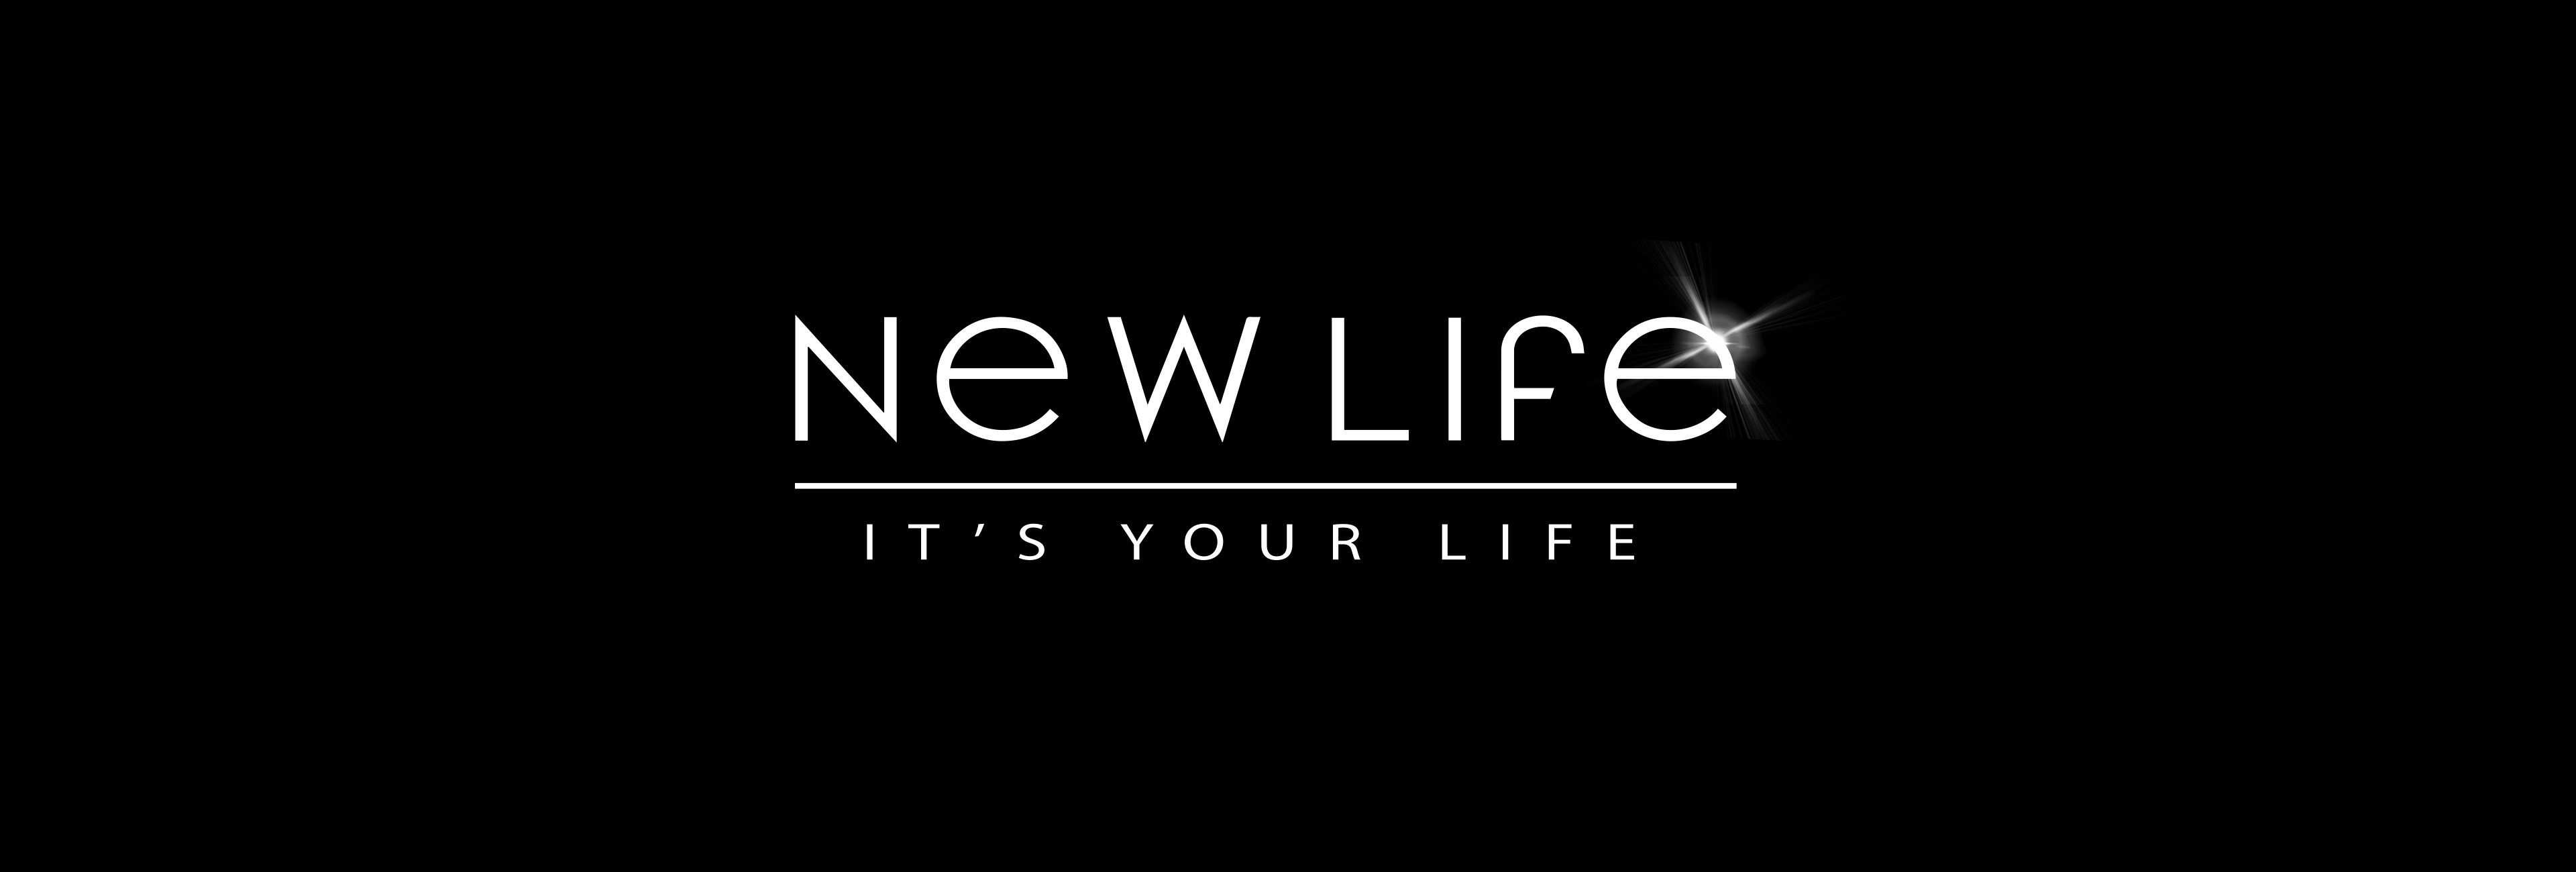 Start new life. The New Life. Лайф Корпорация логотип. Логотип компании "New brand". Новая жизнь логотип.